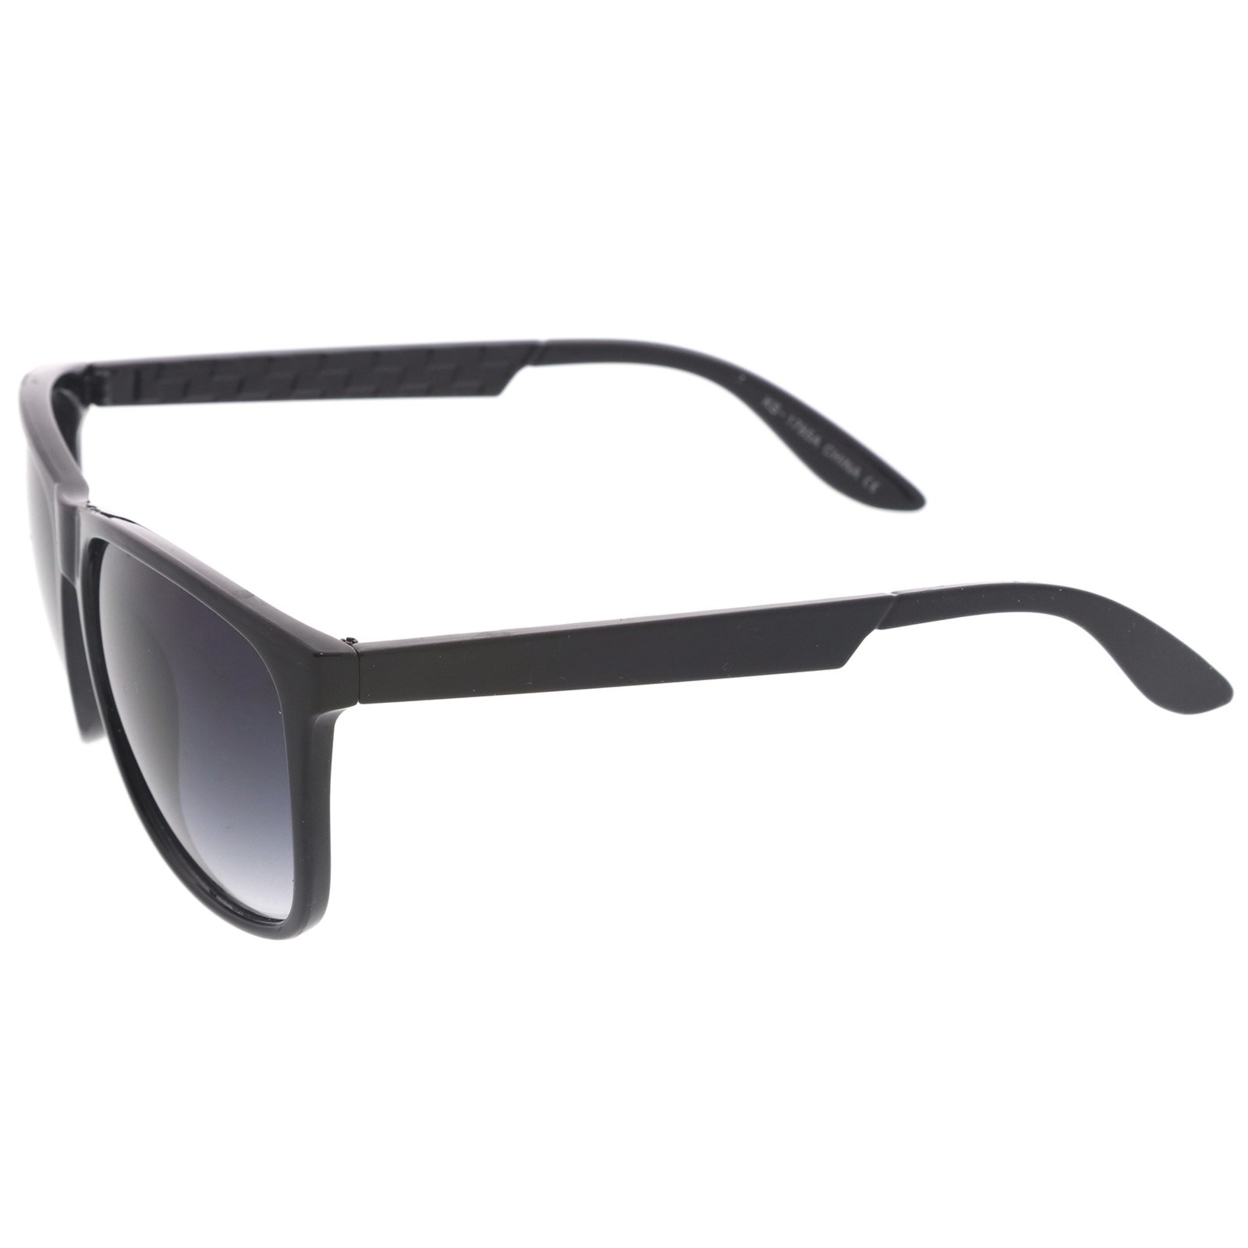 Classic Subtle Flat Top Square Lens Horn Rimmed Sunglasses 57mm - Black / Lavender